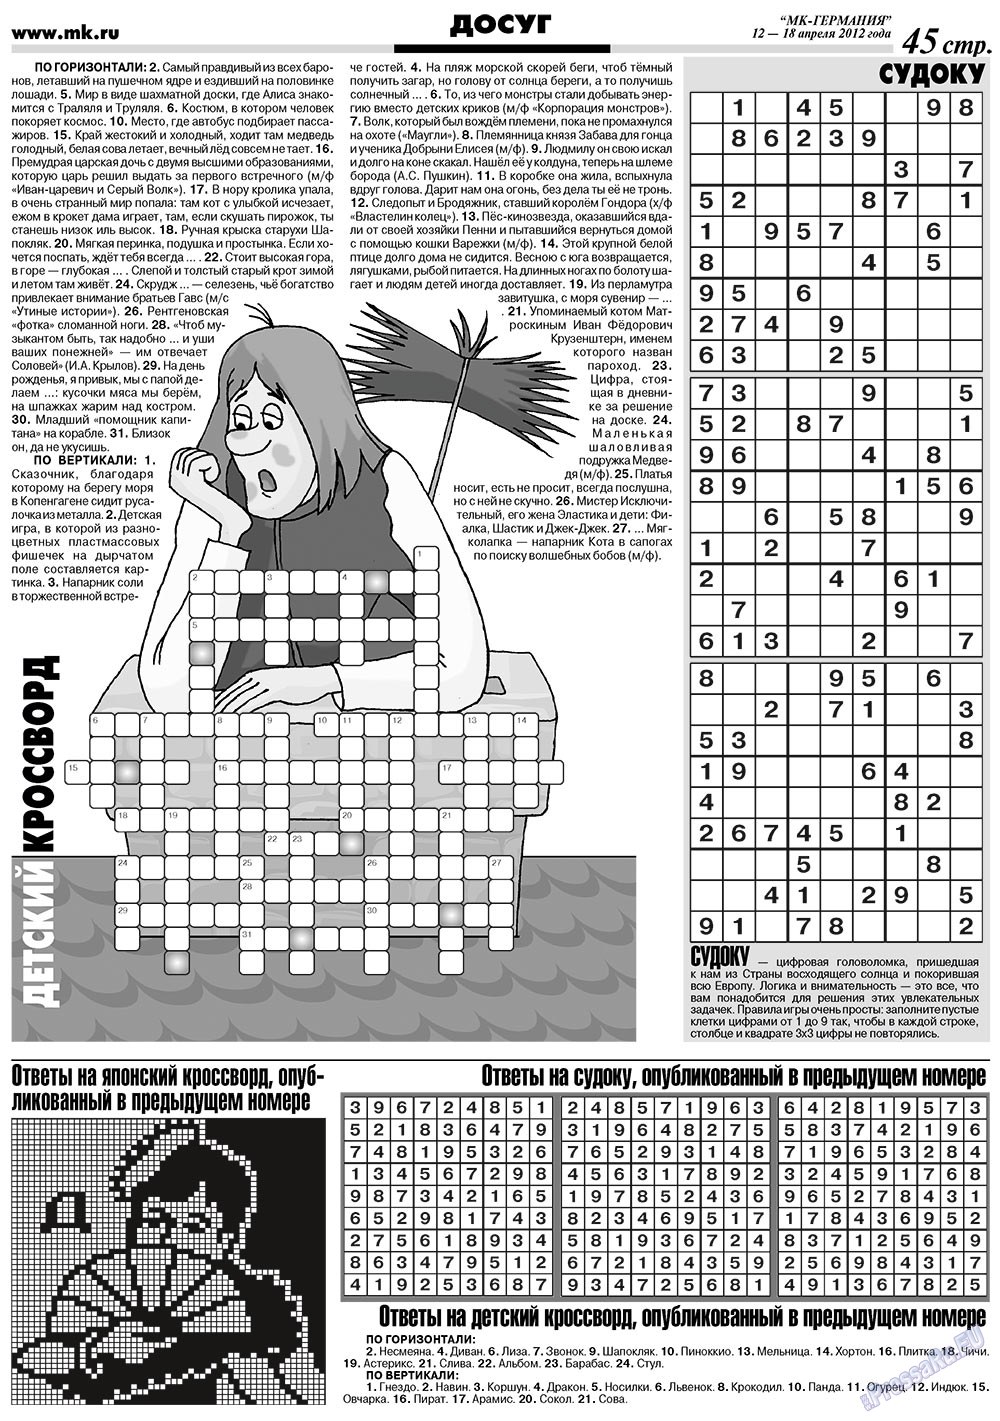 МК-Германия, газета. 2012 №15 стр.45